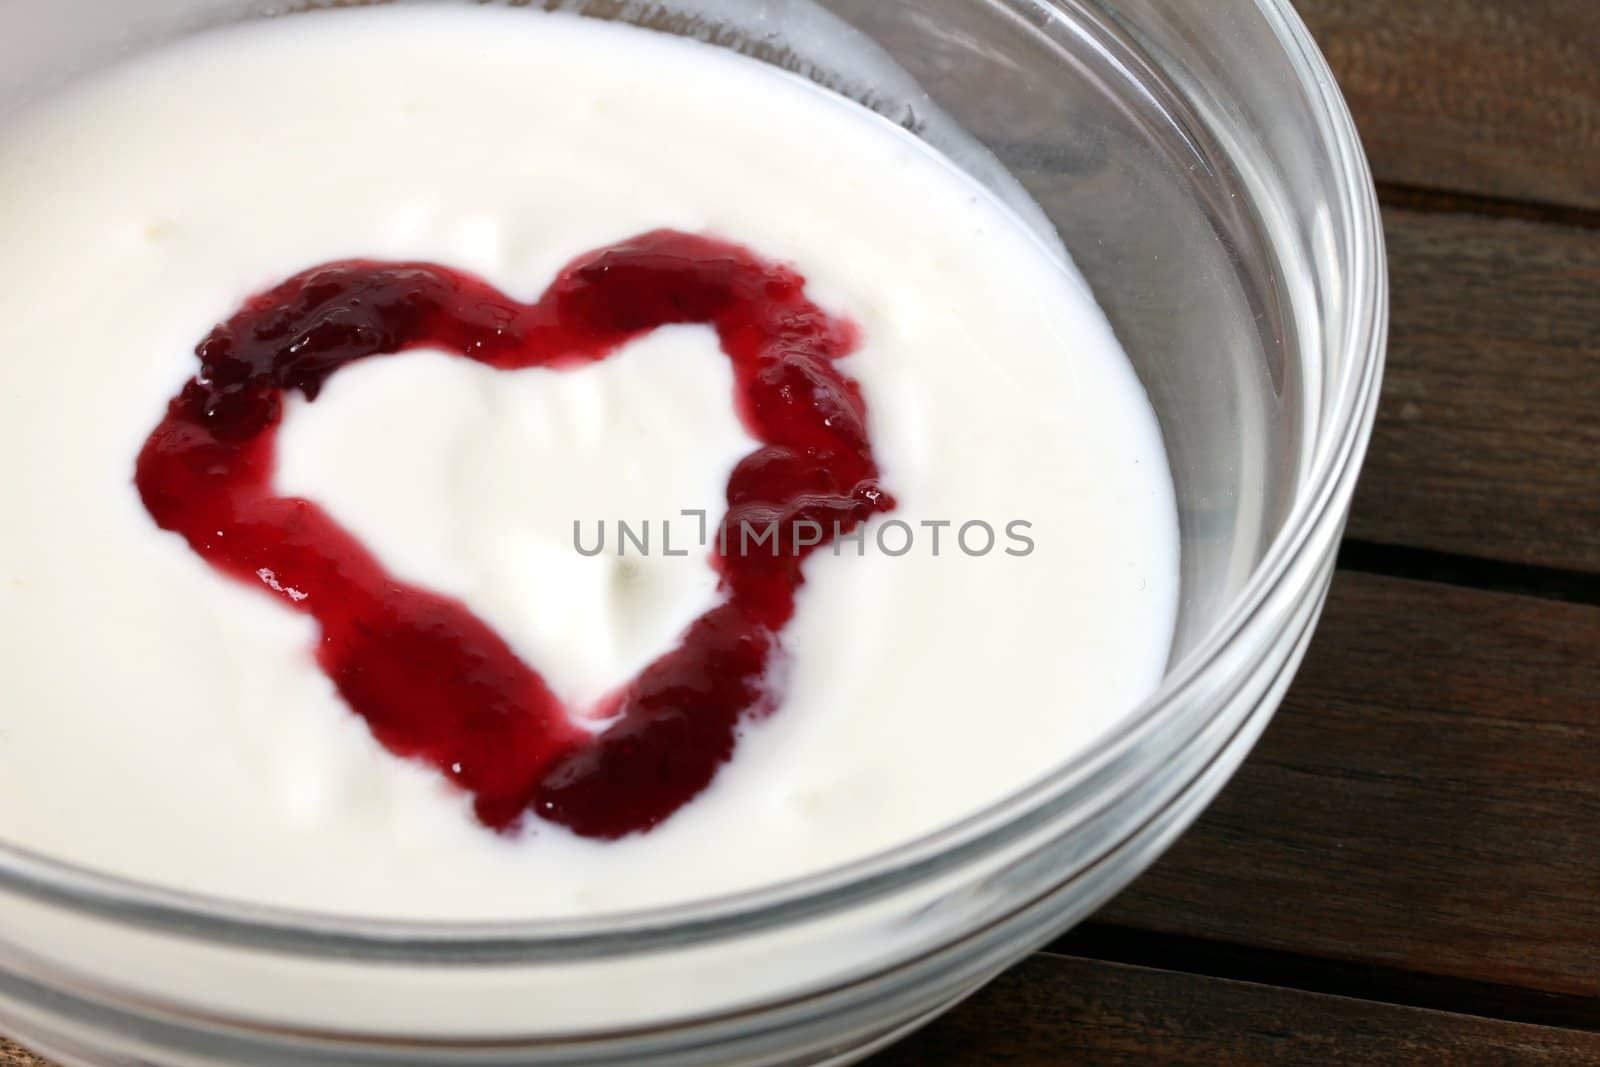 heart shaped fruit yogurt